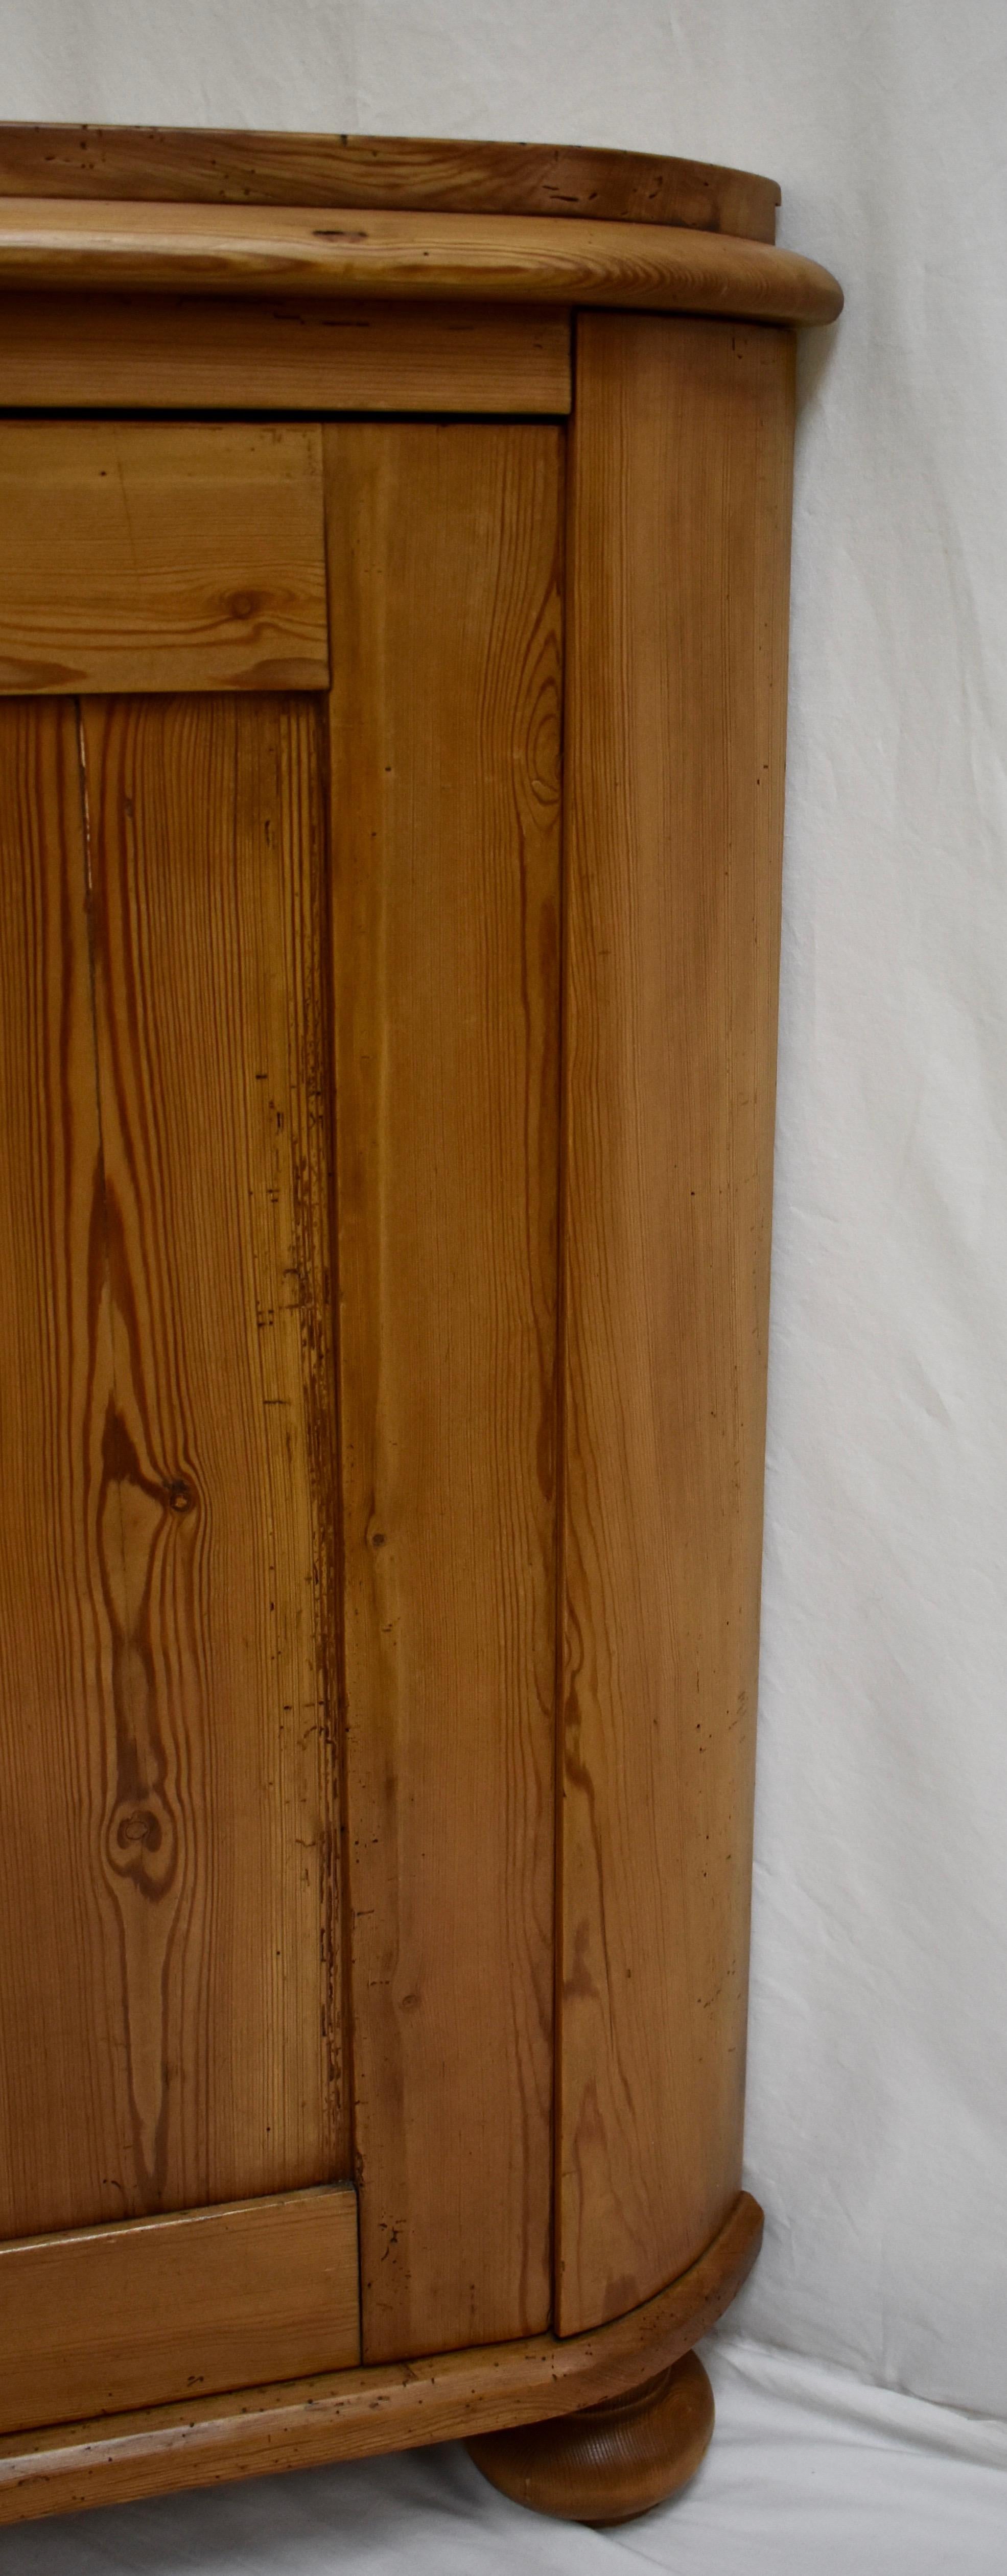 Swedish Pitch Pine One Door Corner Cupboard (19. Jahrhundert)